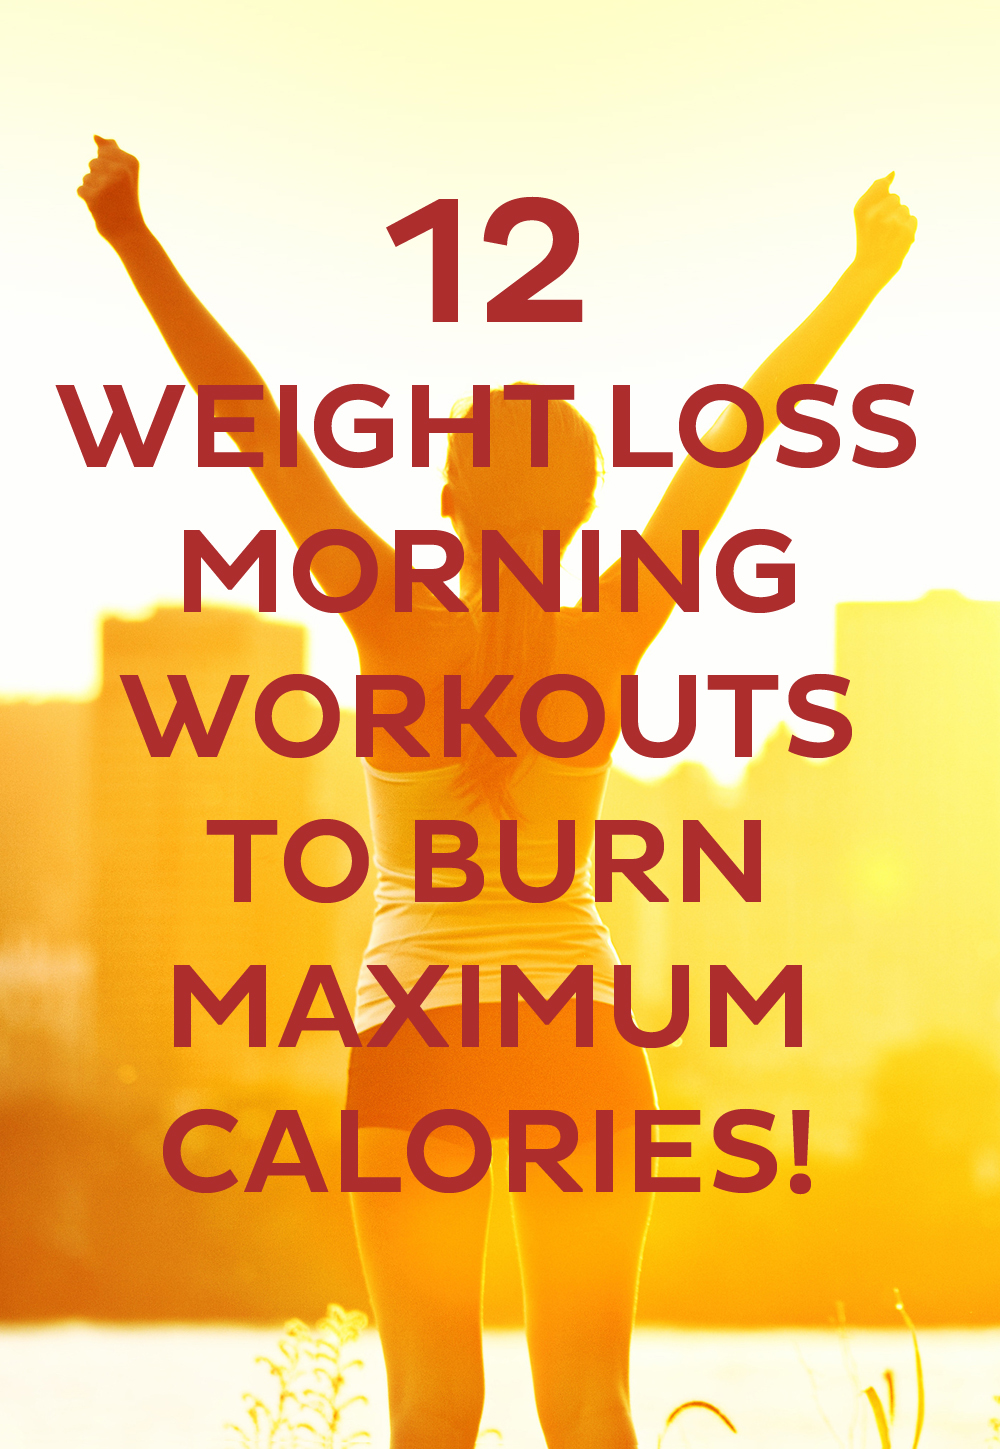 https://www.trimmedandtoned.com/wp-content/uploads/2015/04/weight-loss-morning-workouts.jpg